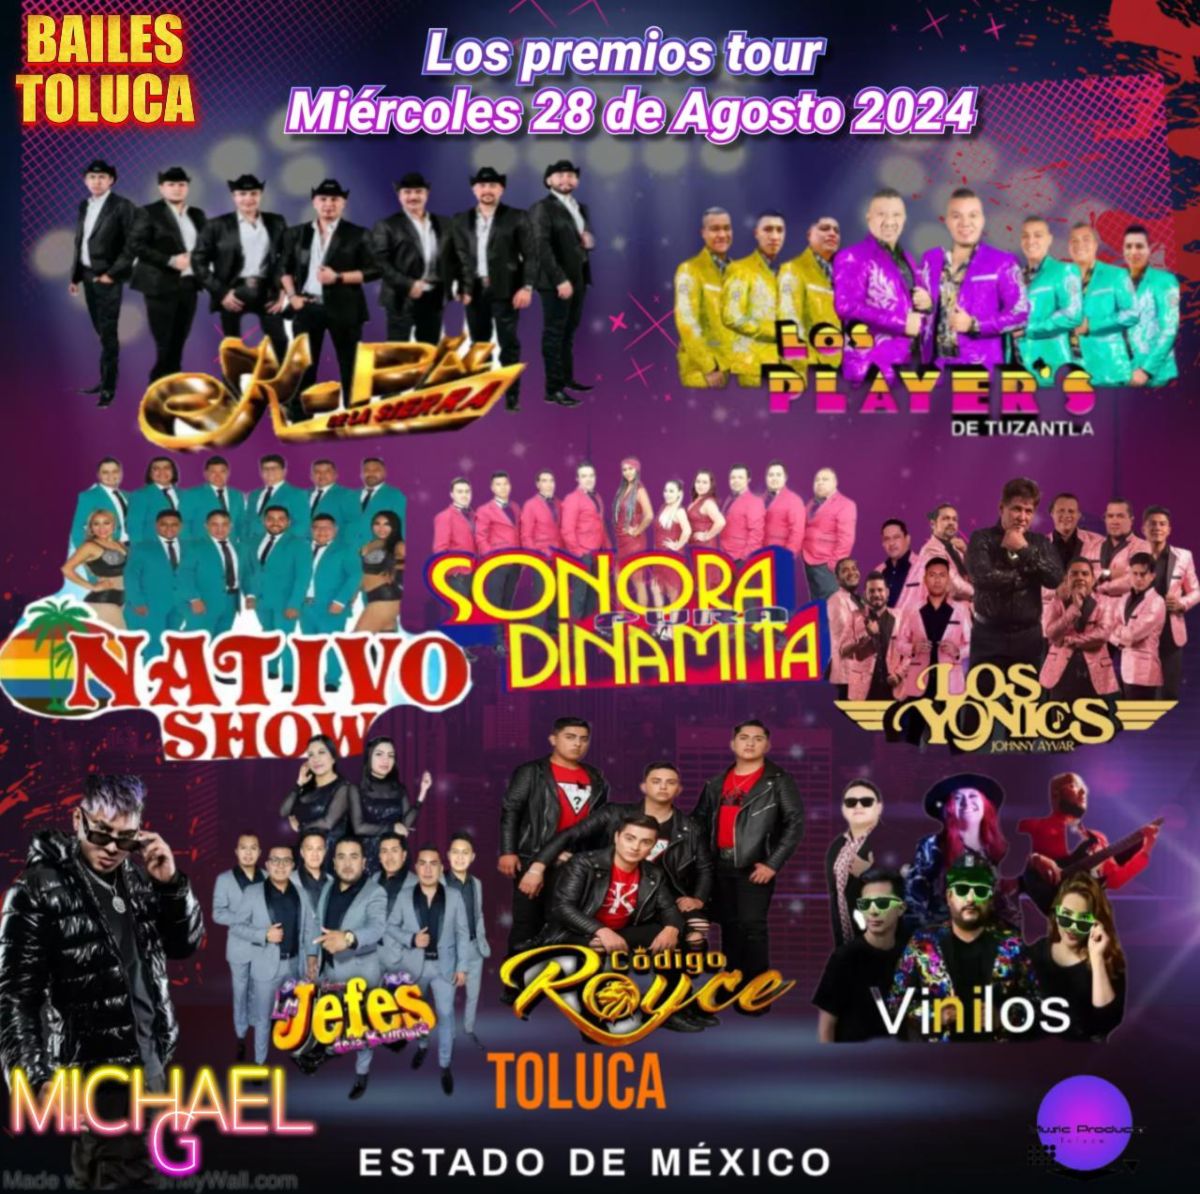 Artistas confirmados para la entrega de premios tour Toluca 2024